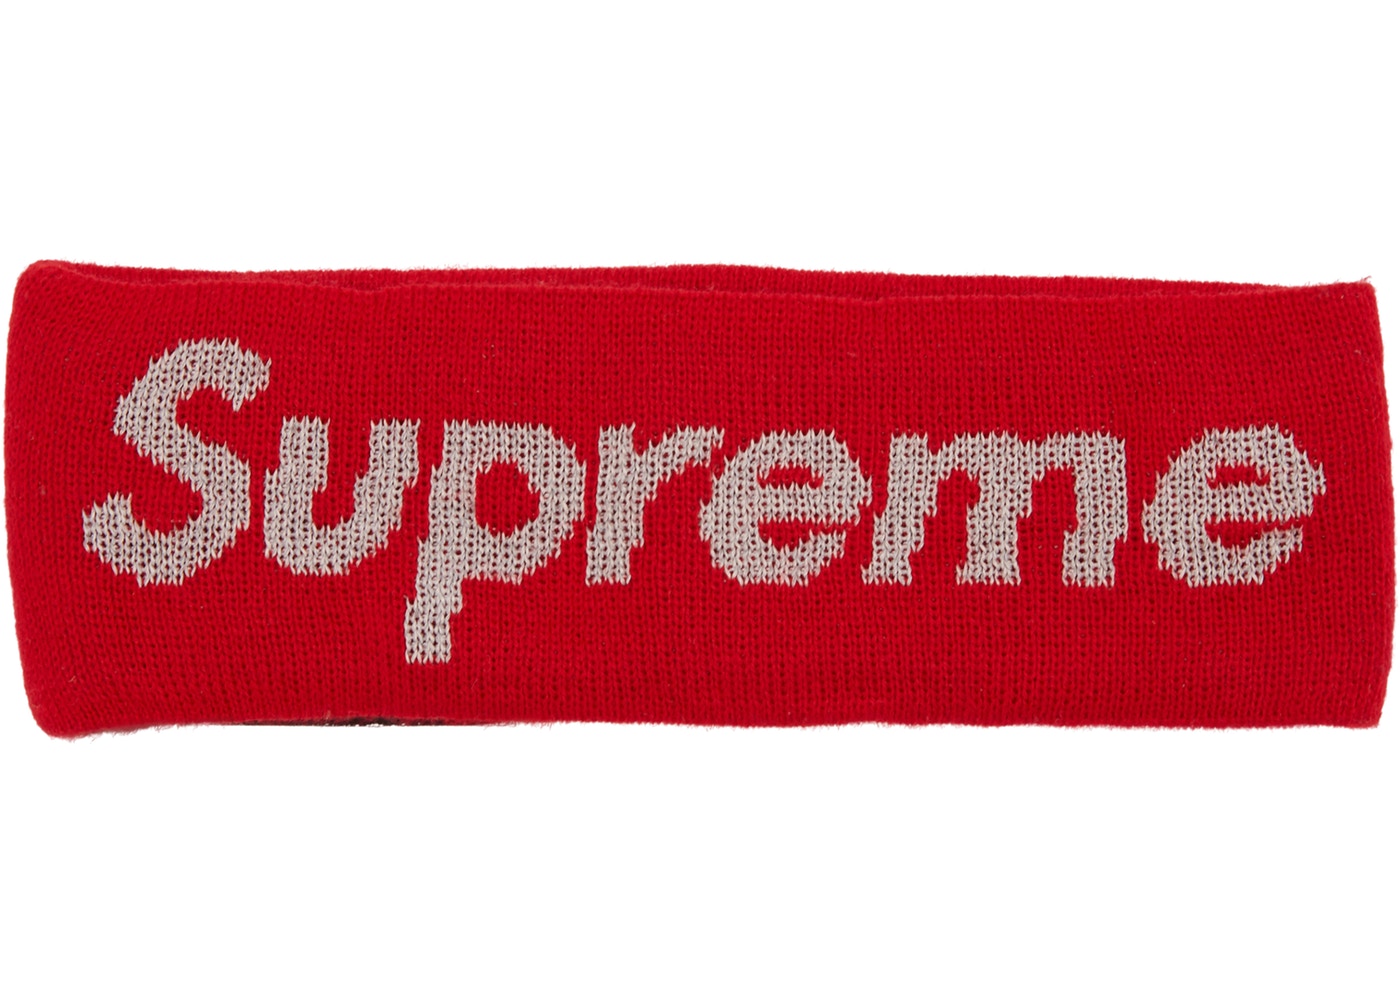 supreme headband review